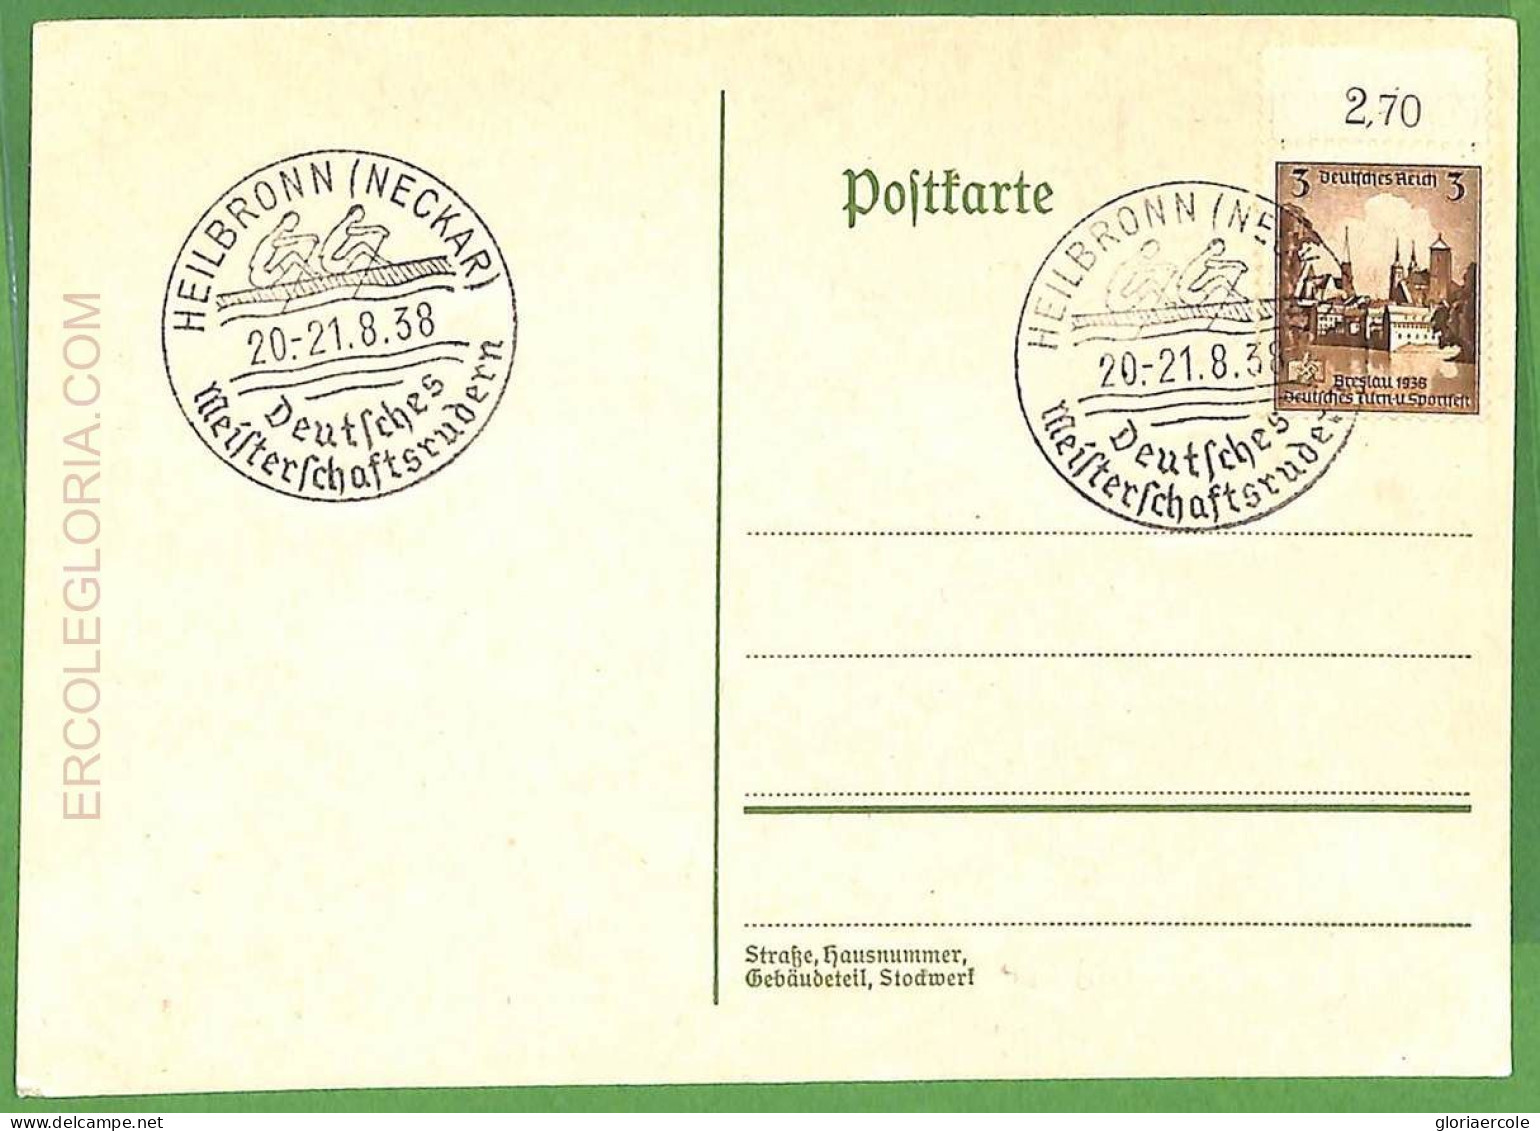 Af3726 - GERMANY - POSTAL HISTORY - Postcard - ROWING Canoes - 1938 - Canoë